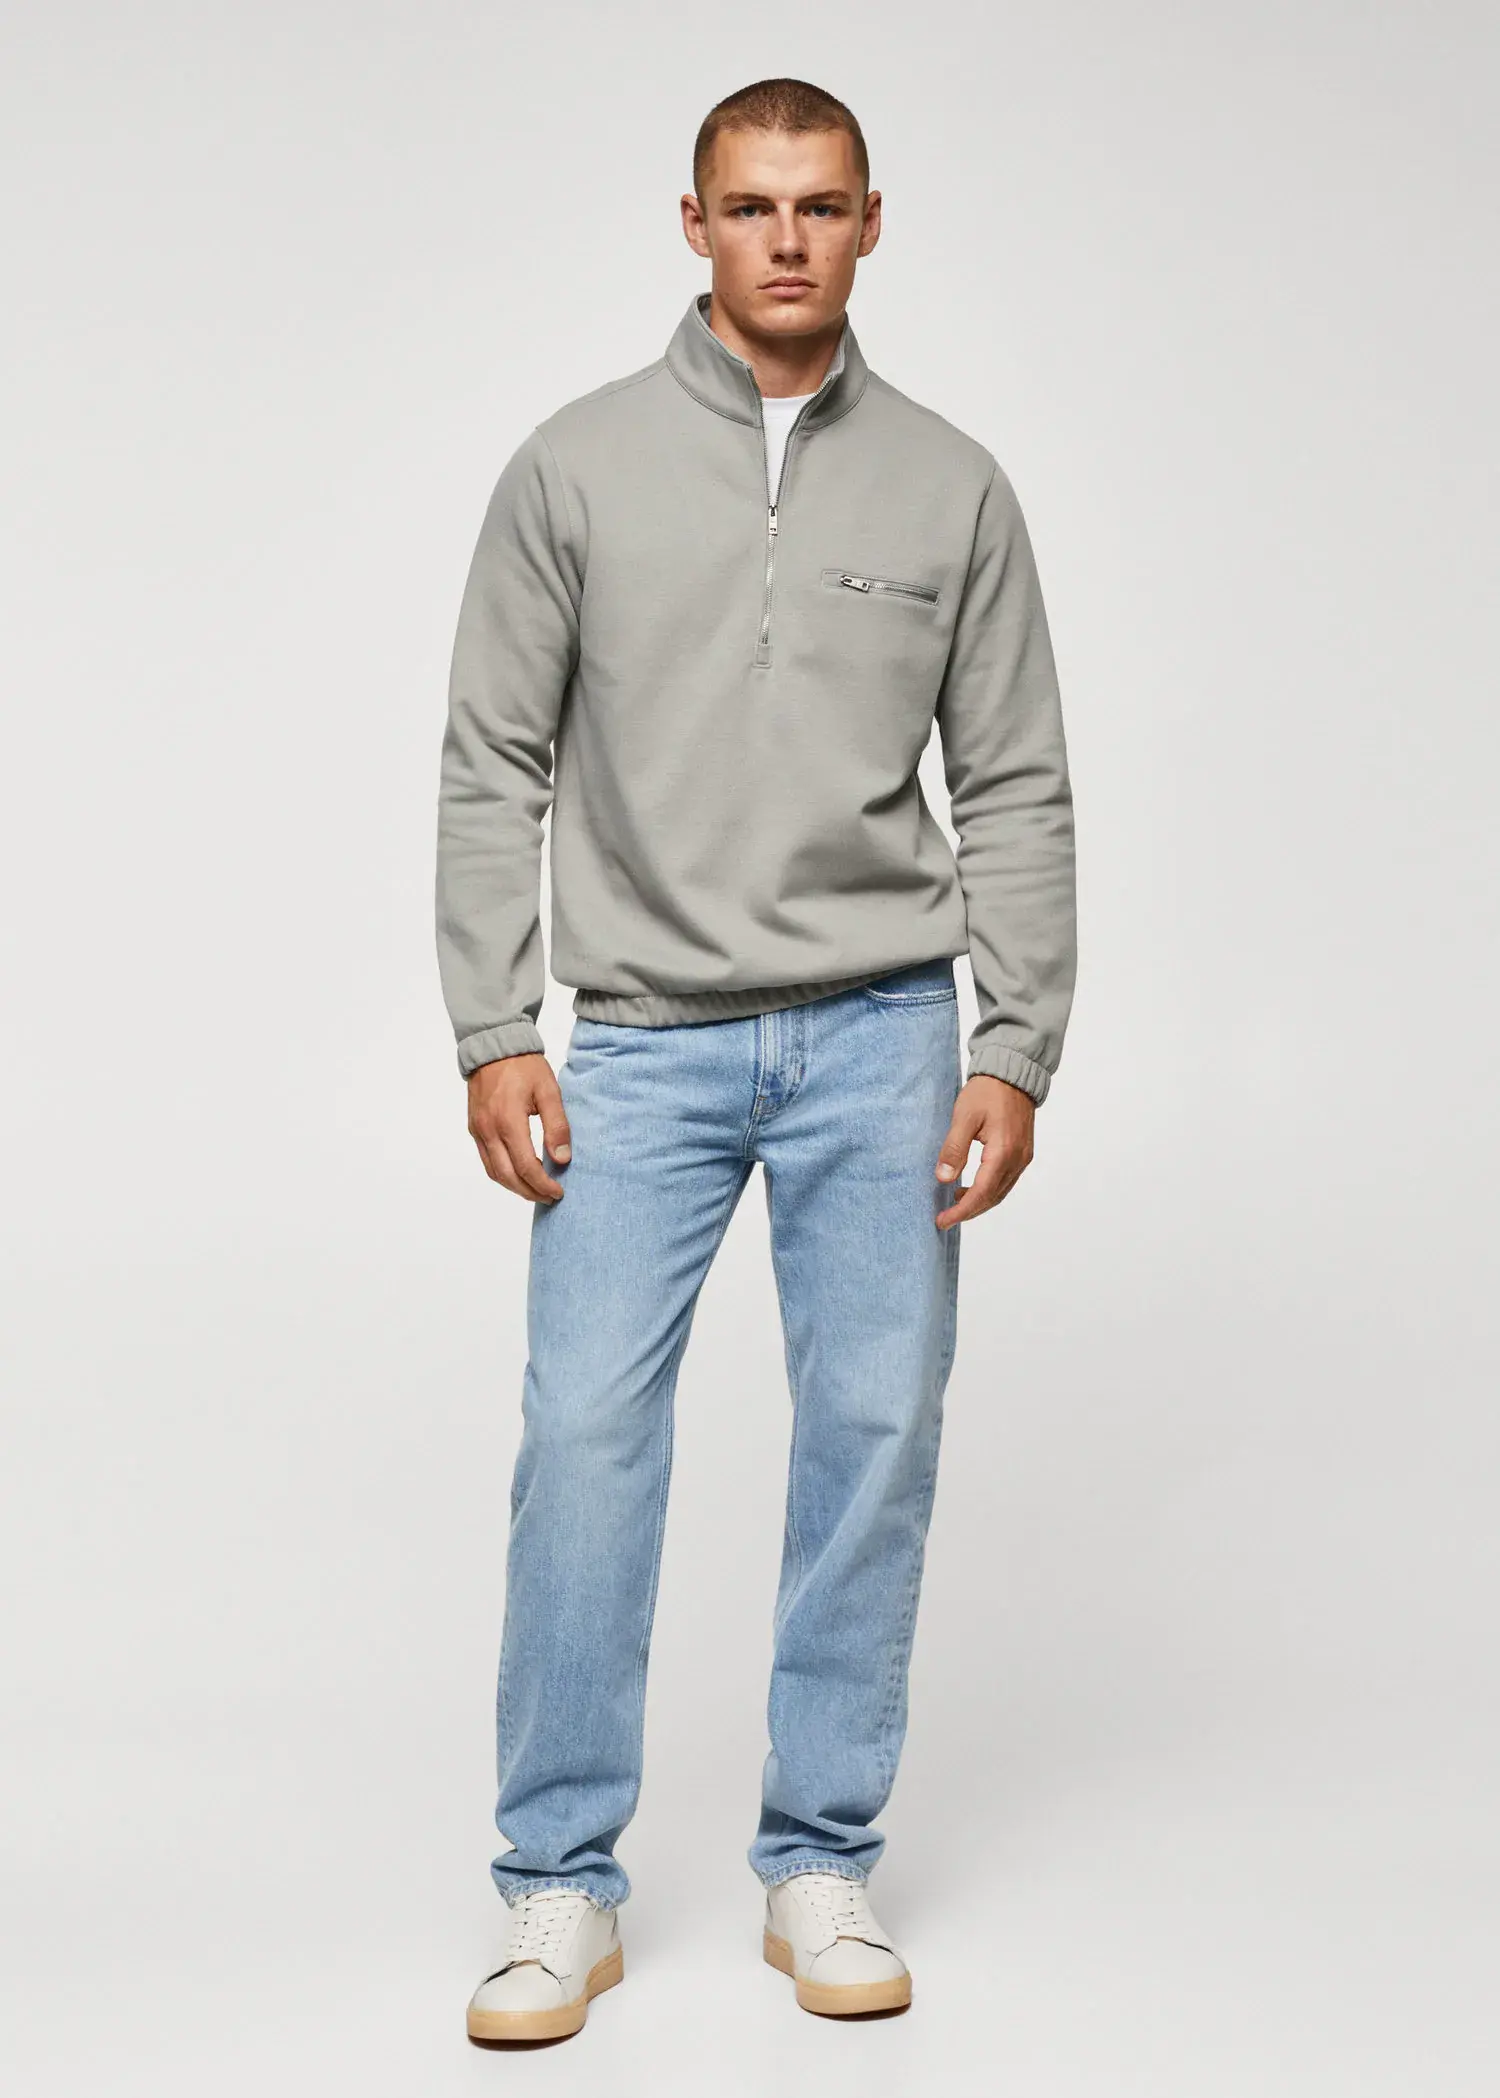 Mango Cotton sweatshirt with zipper neck. 2